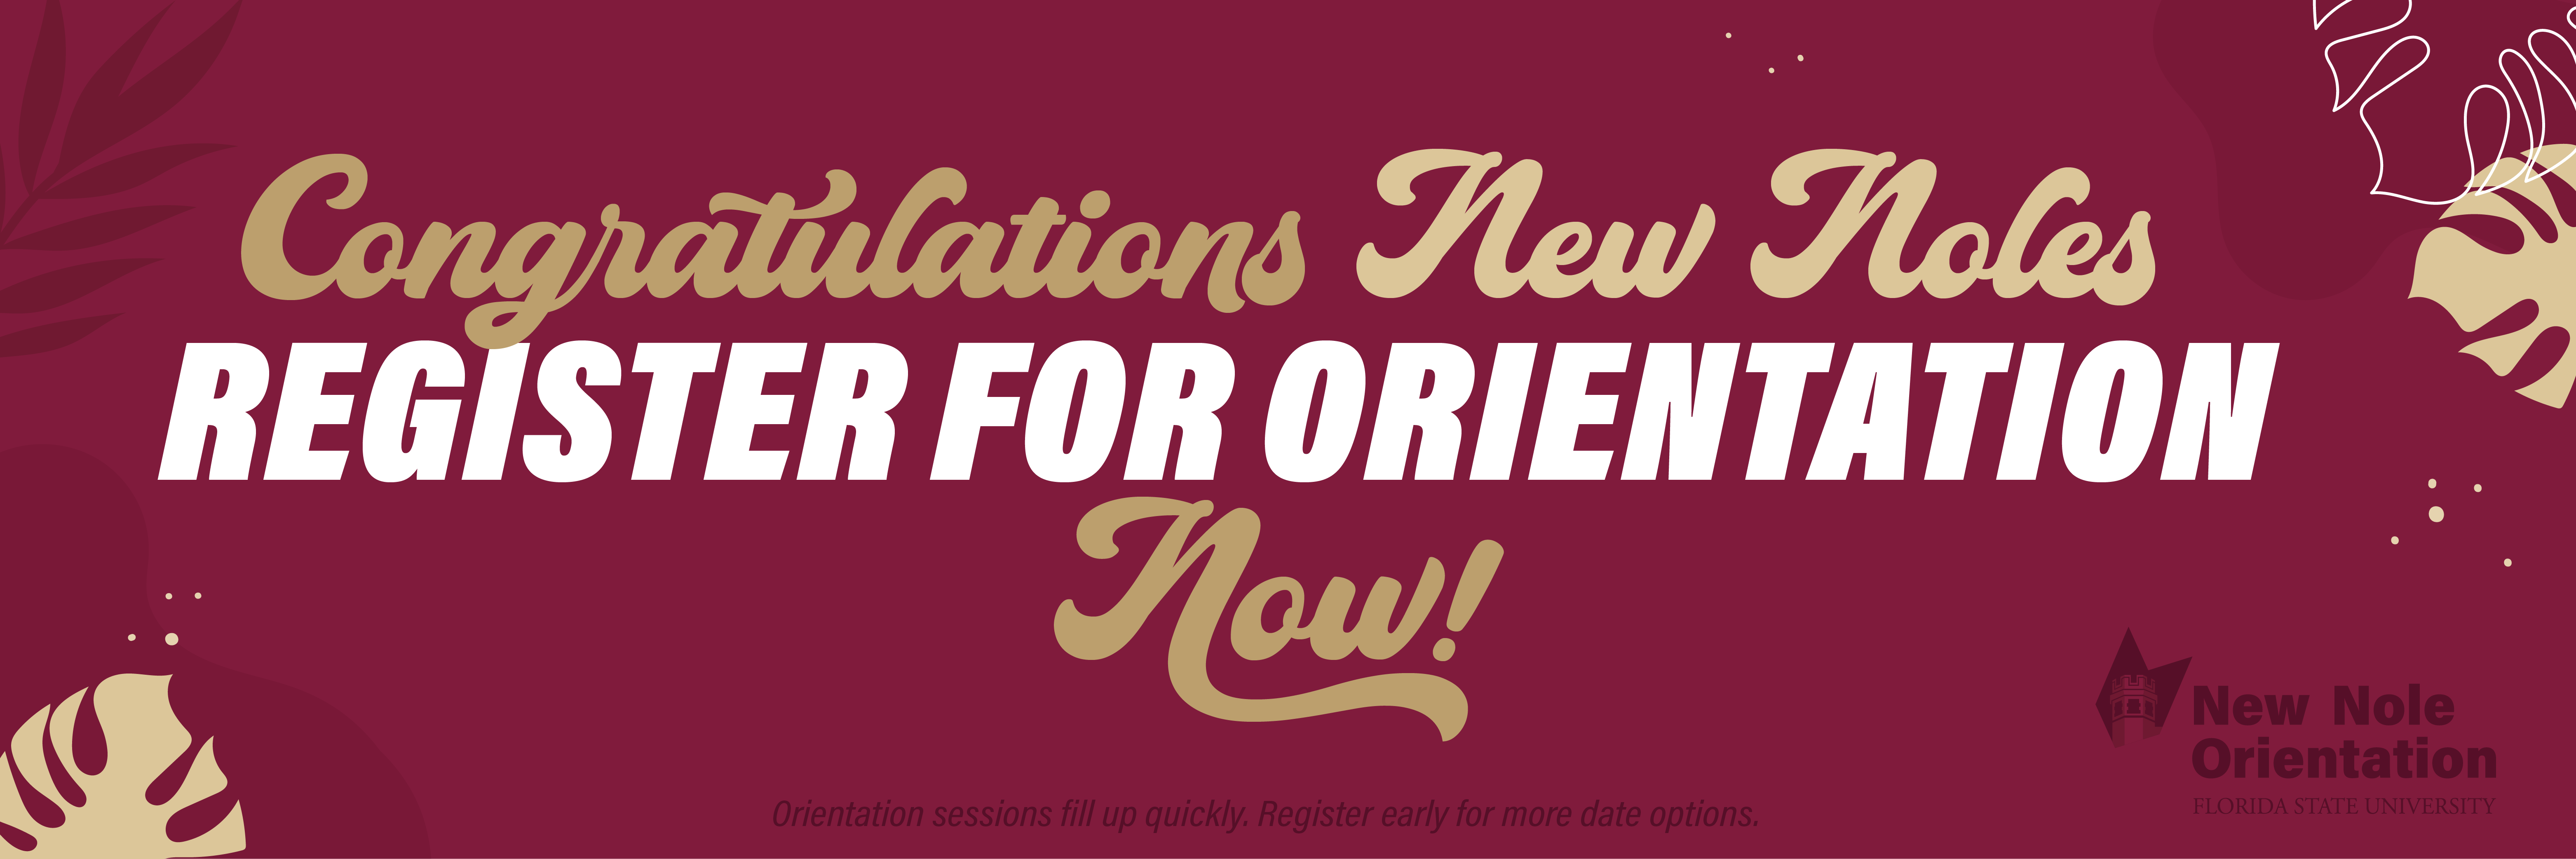 Congratulations new noles! register for orientation now!